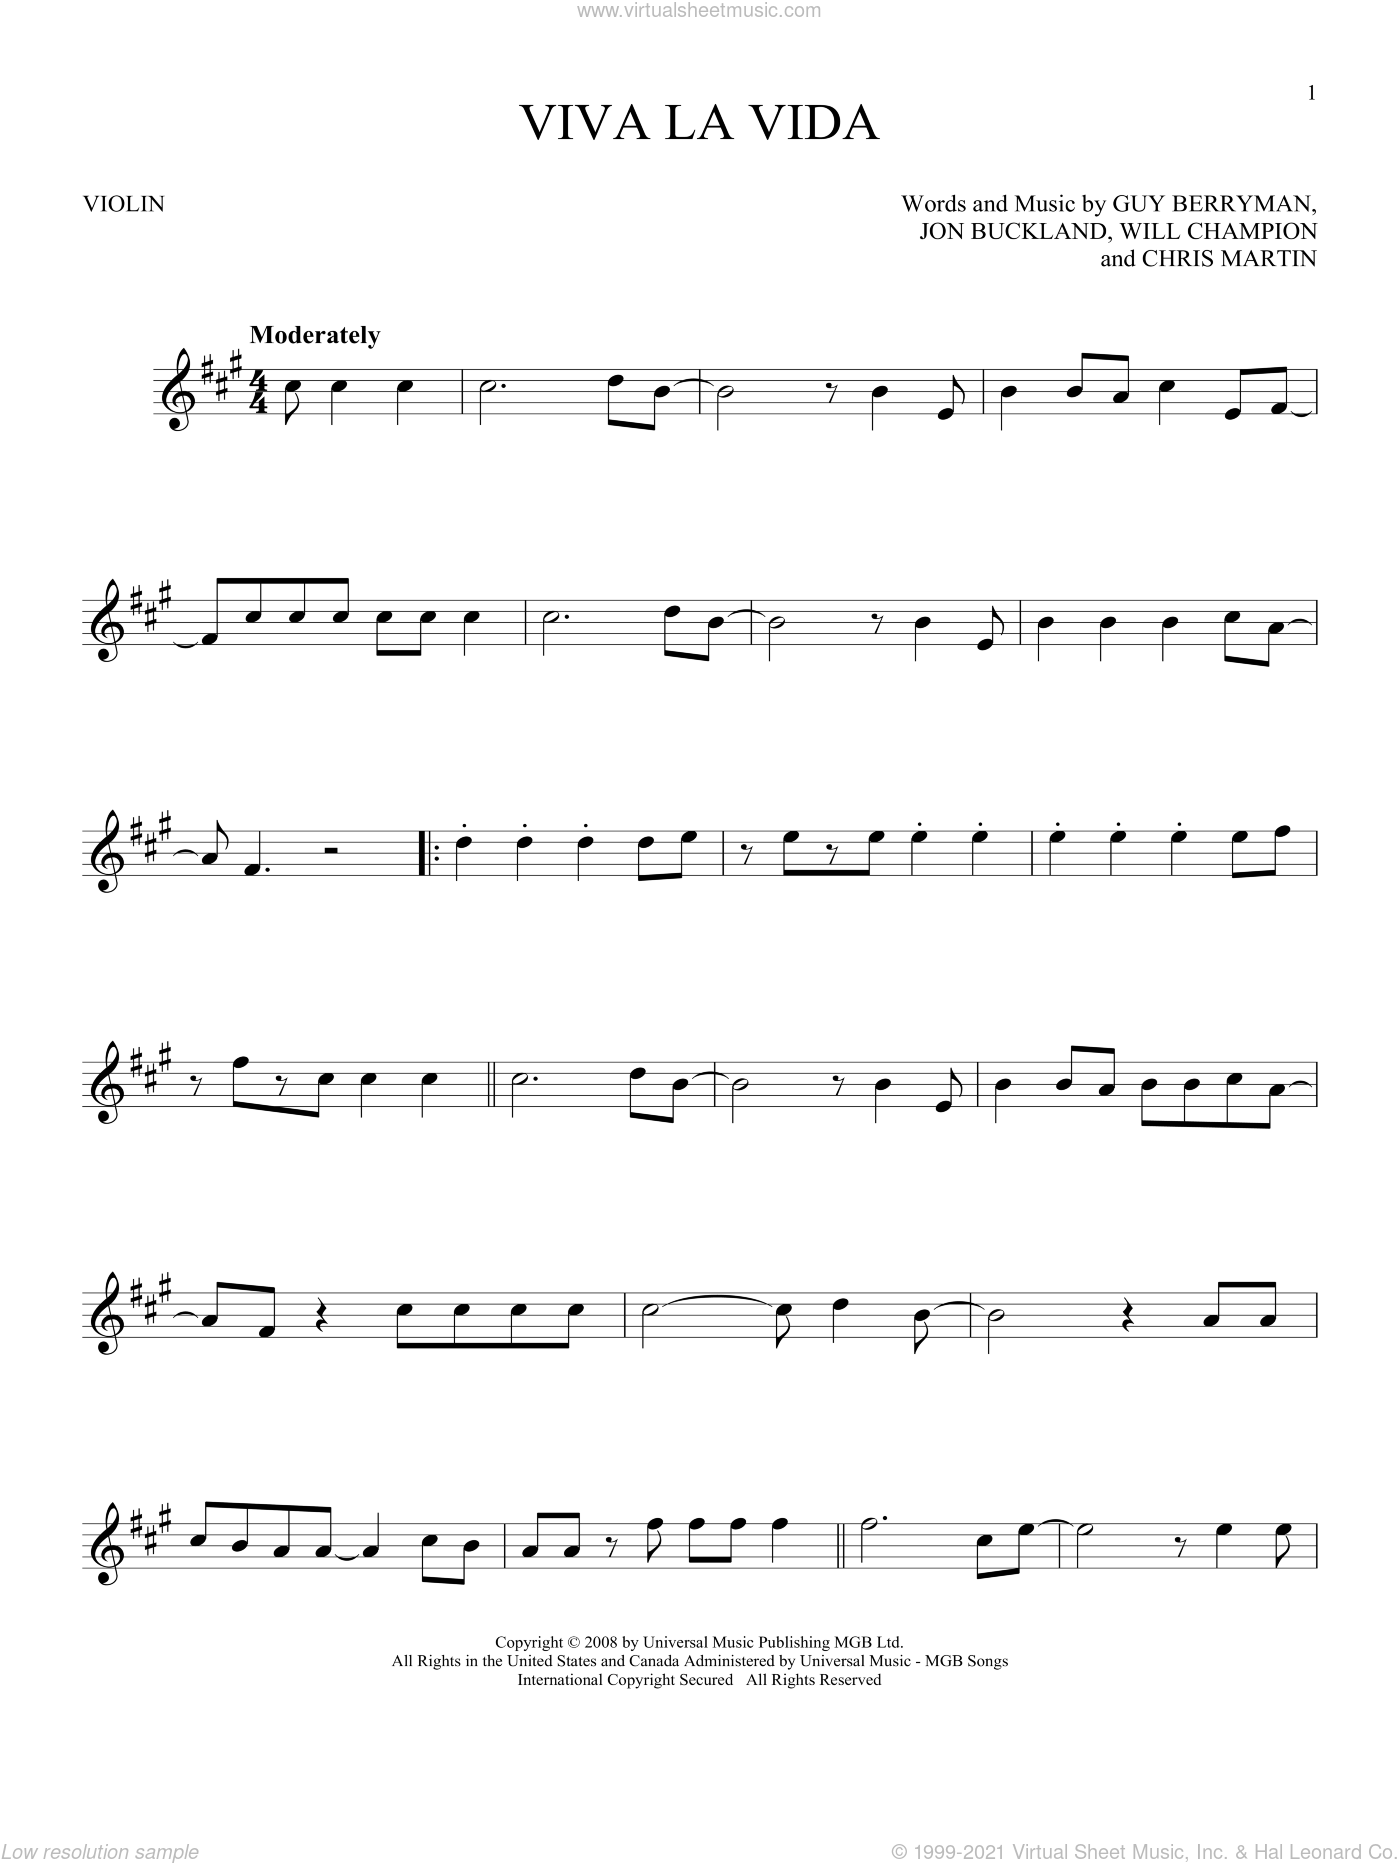 La Vida sheet music for violin solo (PDF) v2